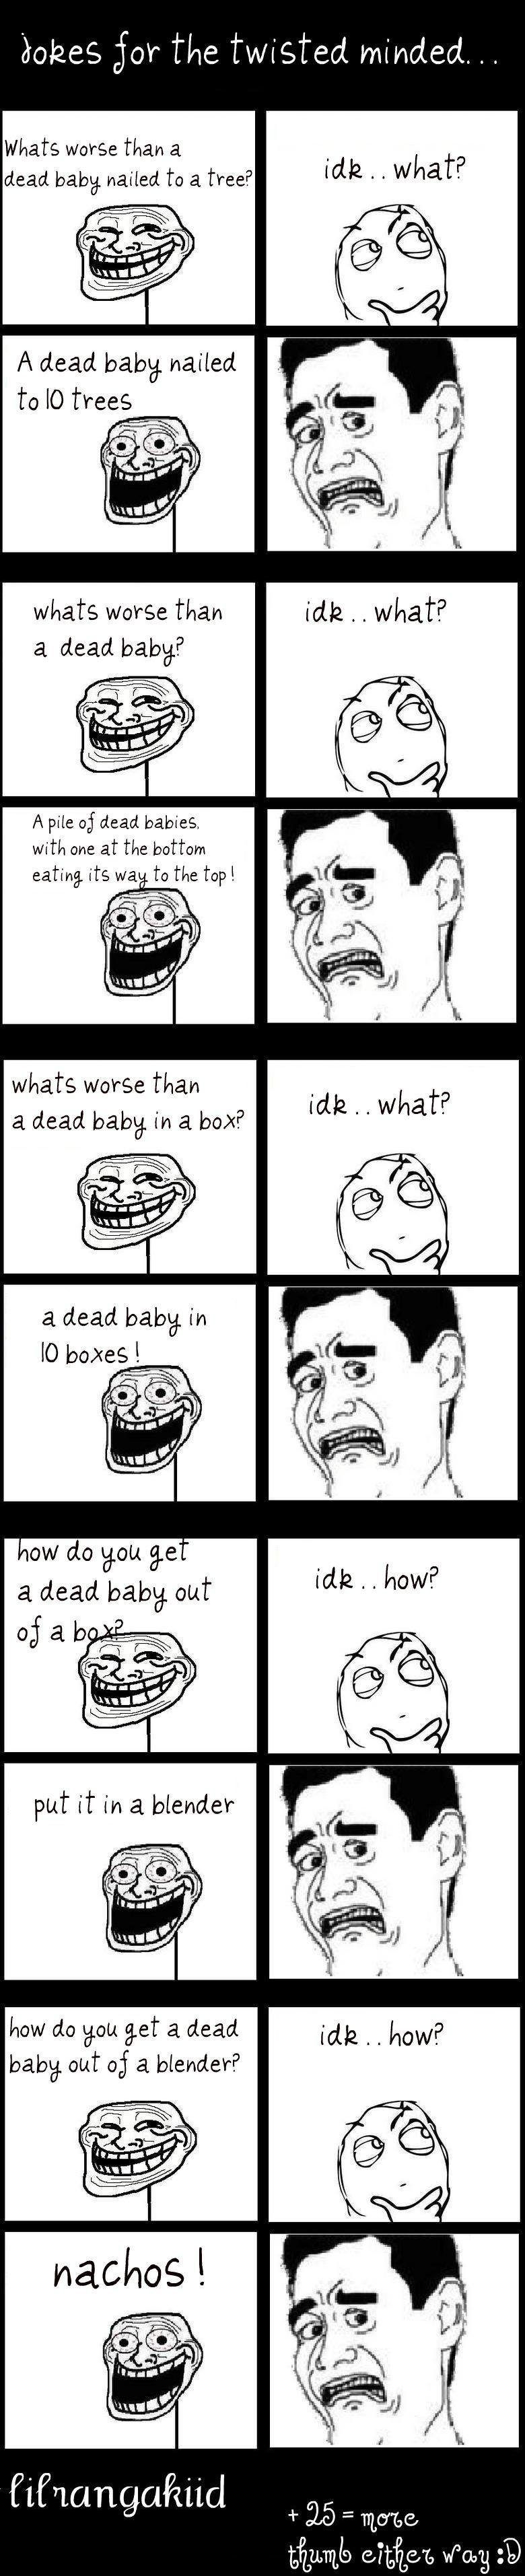 Dead baby jokes trees